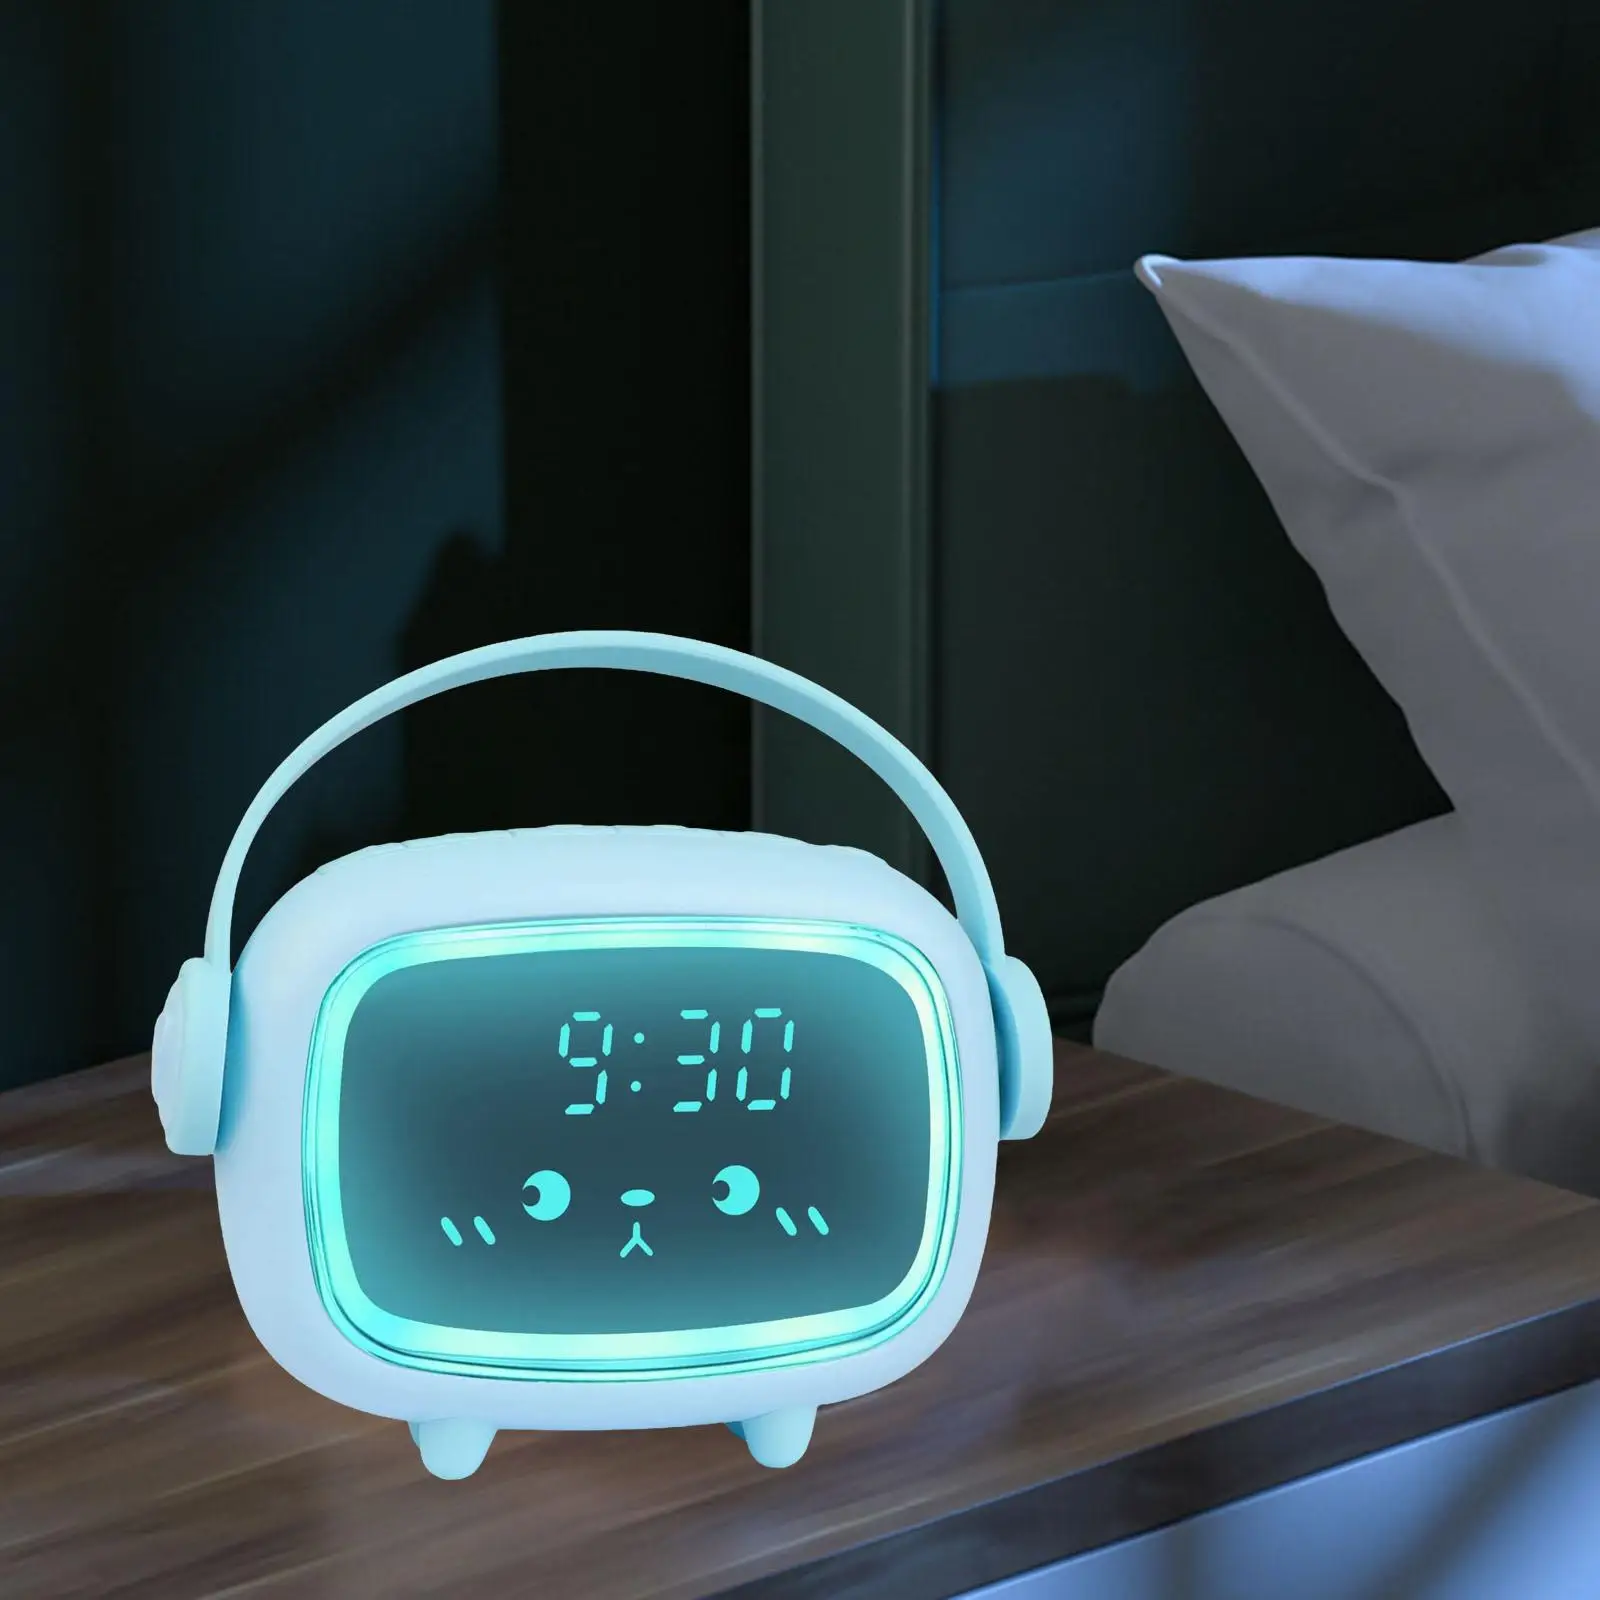 Desk Clocks Temperature Display Decor for Living Room Bedside Table Shop